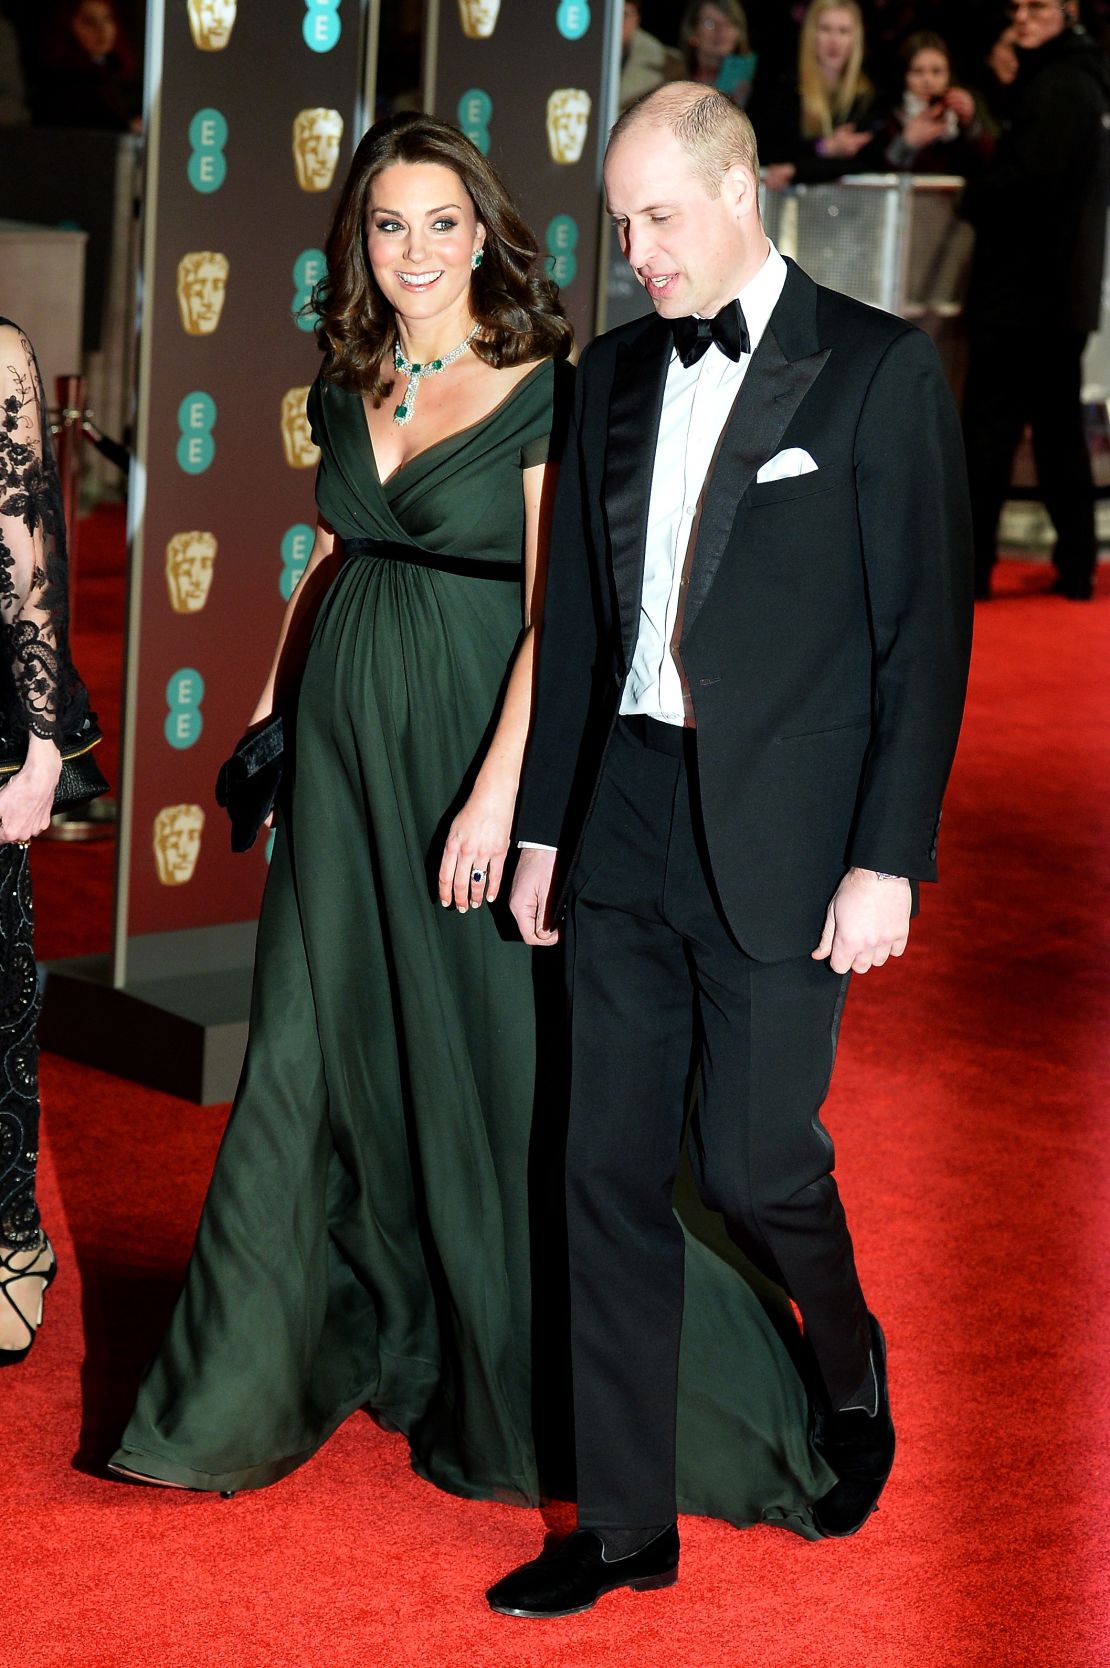 Prince William, Duke of Cambridge and Catherine, Duchess of Cambridge attend the EE British Academy Film Awards (BAFTA) 